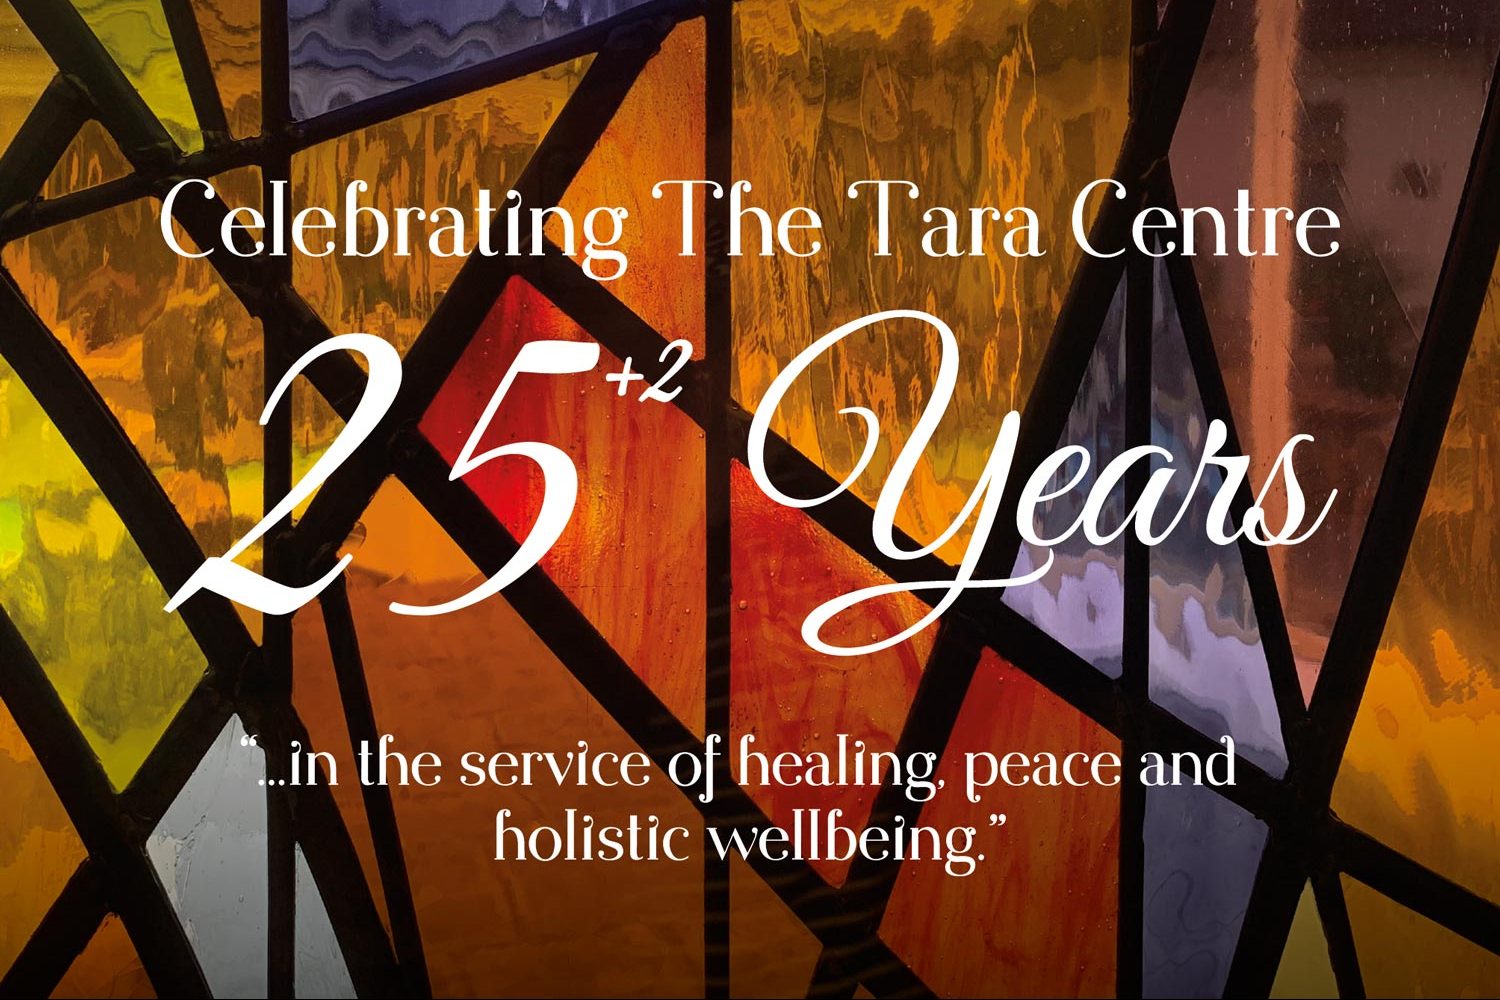 Live Stream of The Tara Centre 25<sup>+2</sup> Year Celebration Event